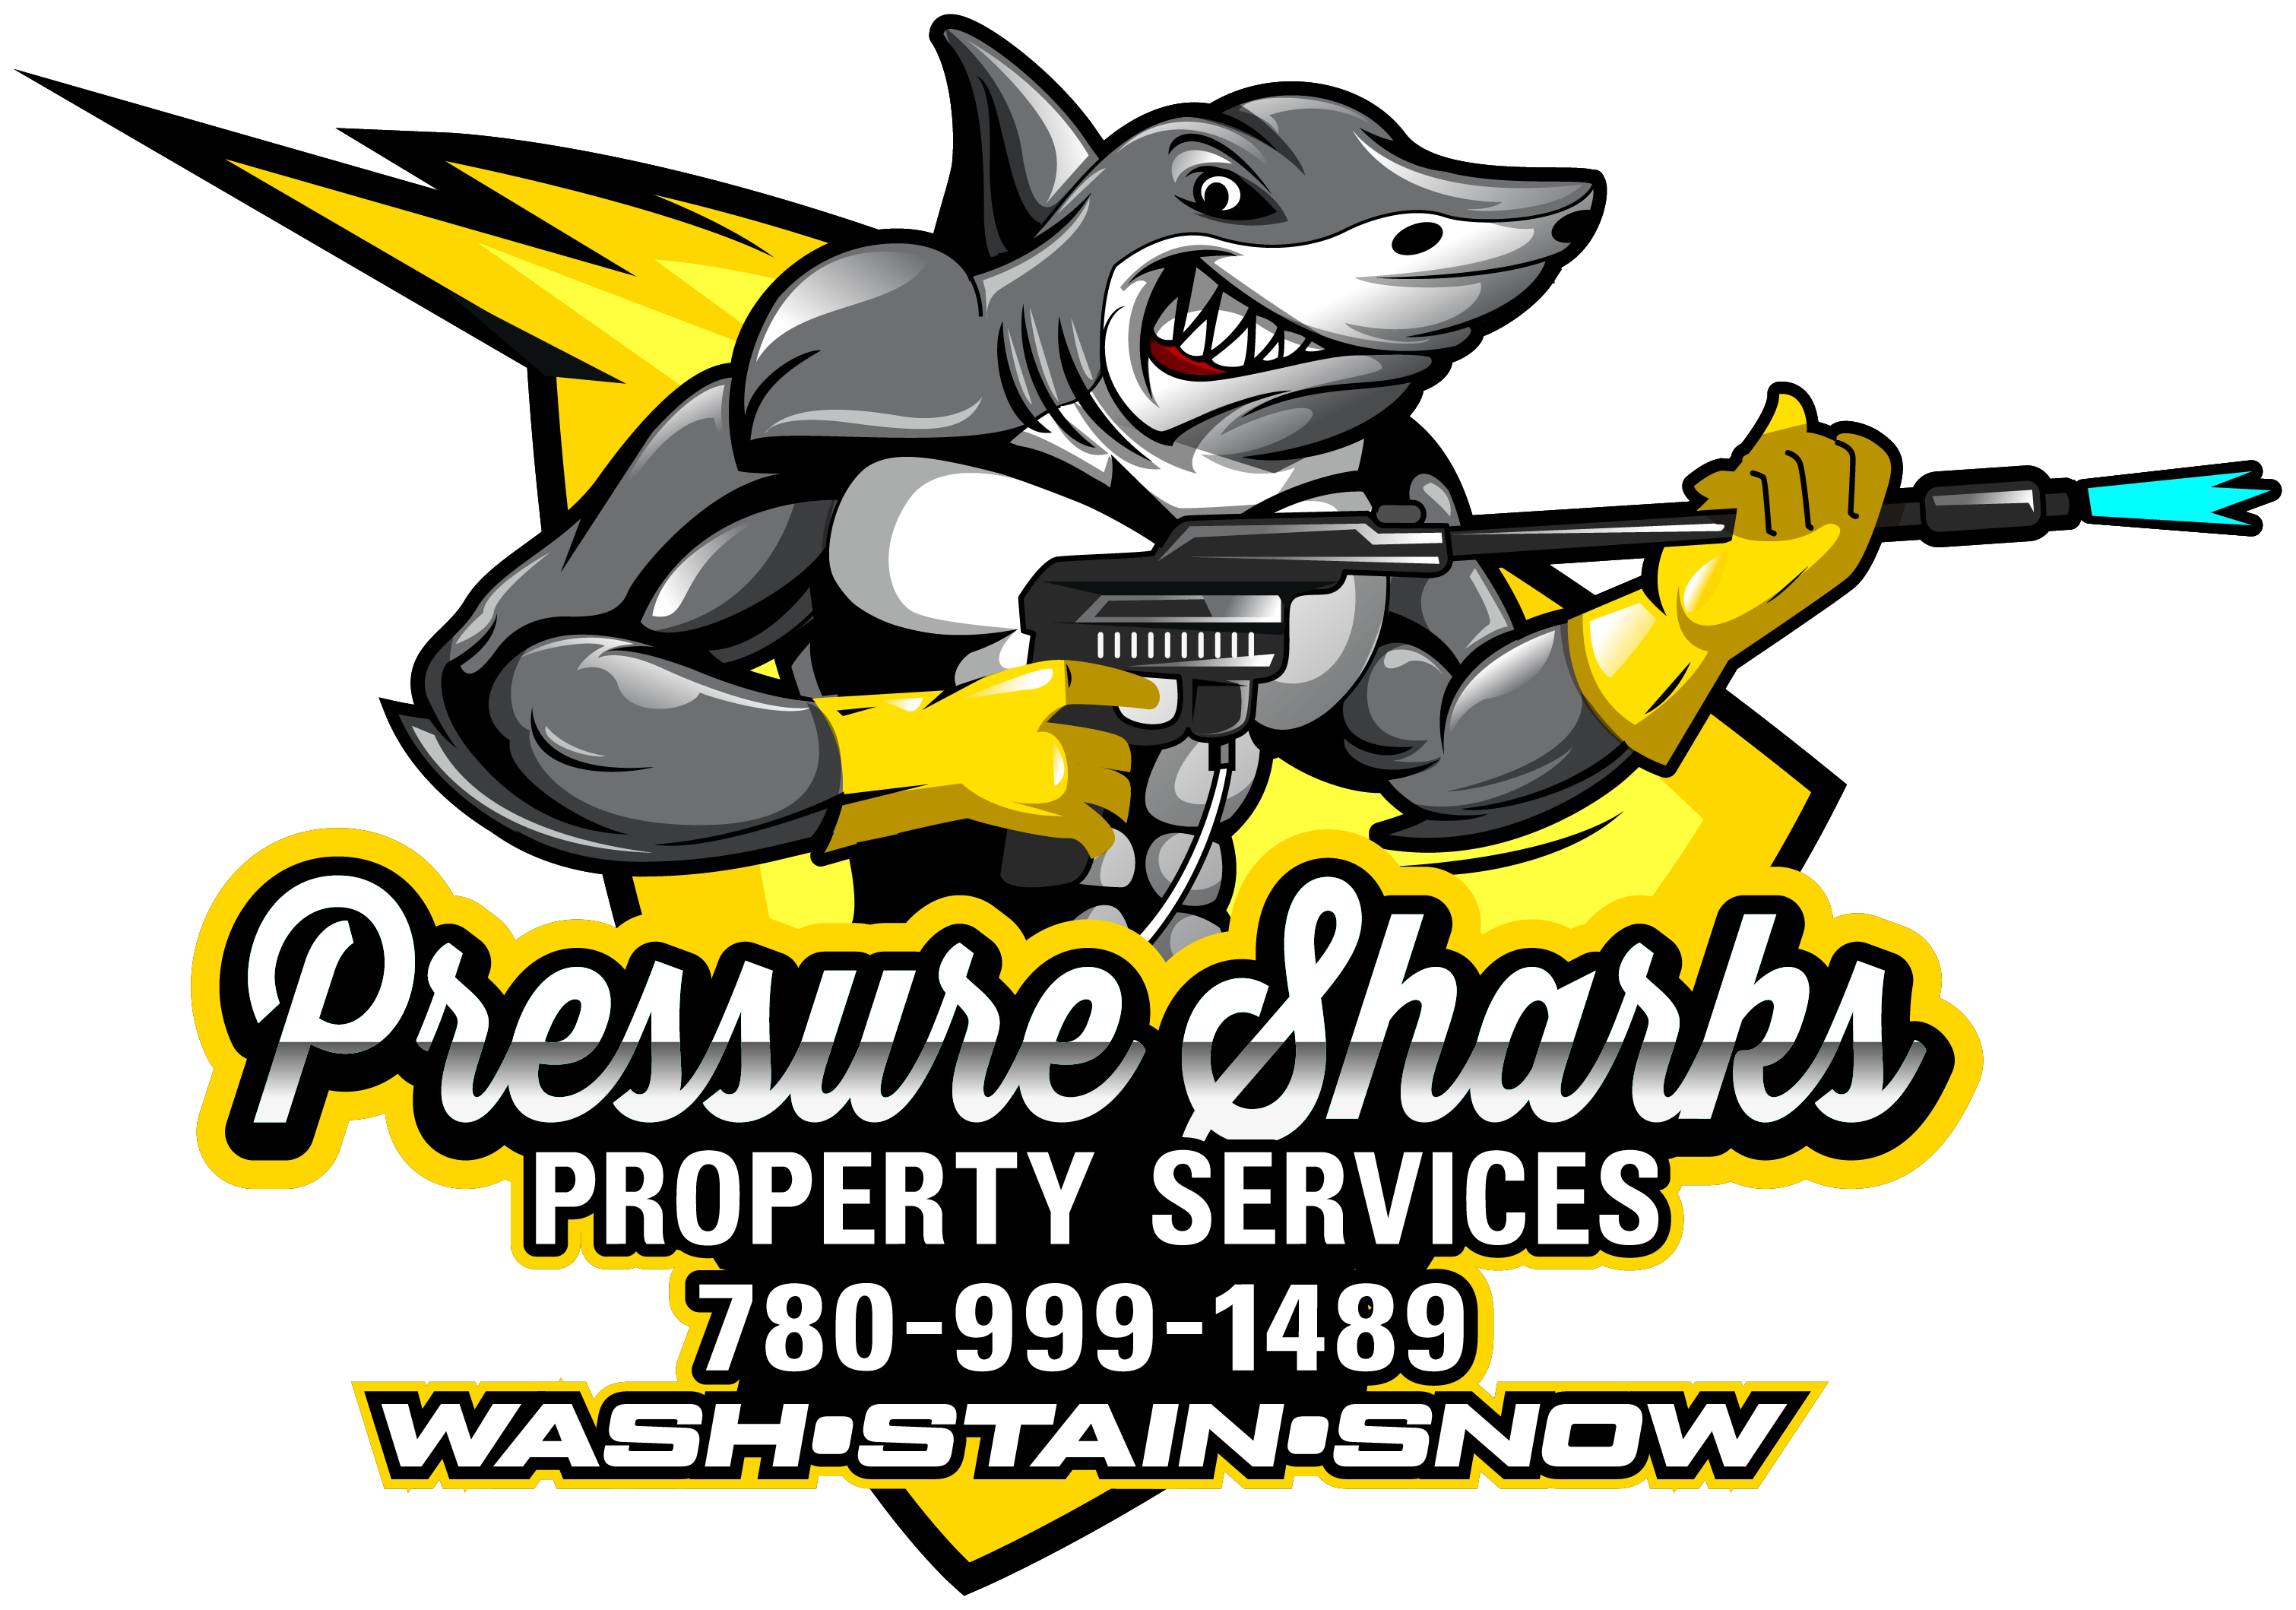 Pressure Sharks